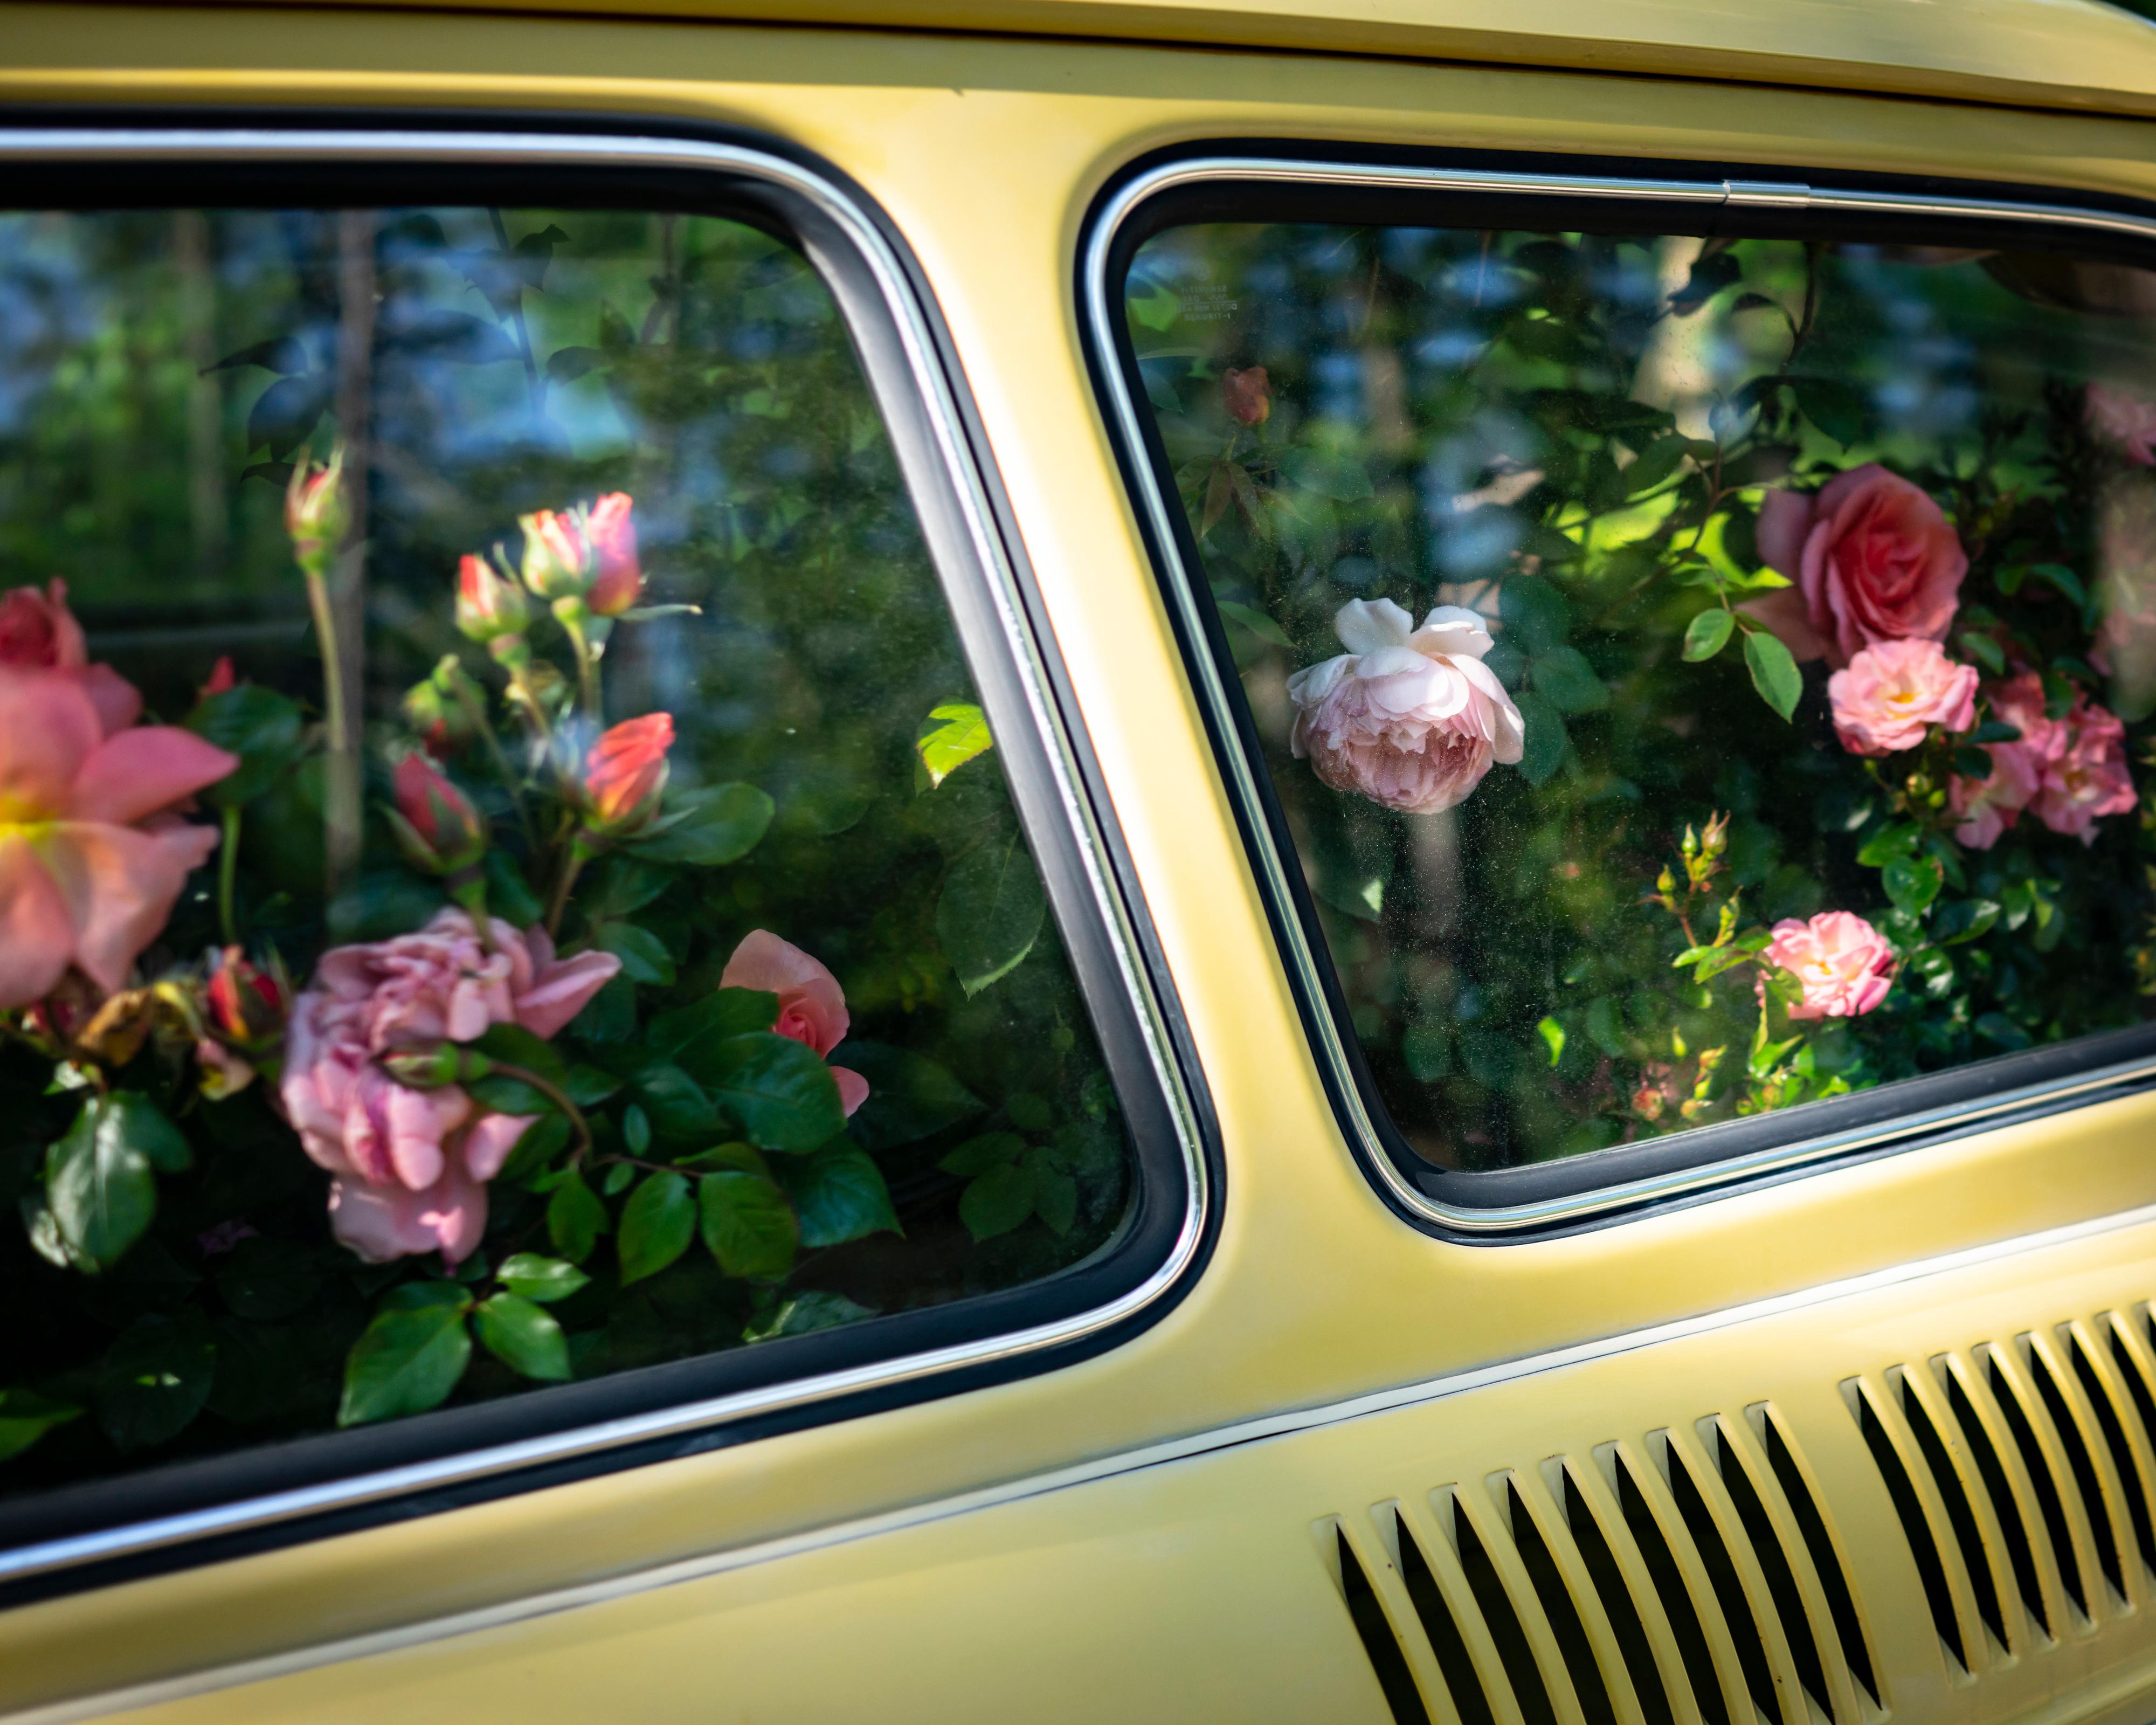 Cig Harvey Color Photograph - Roses (Yellow Car)